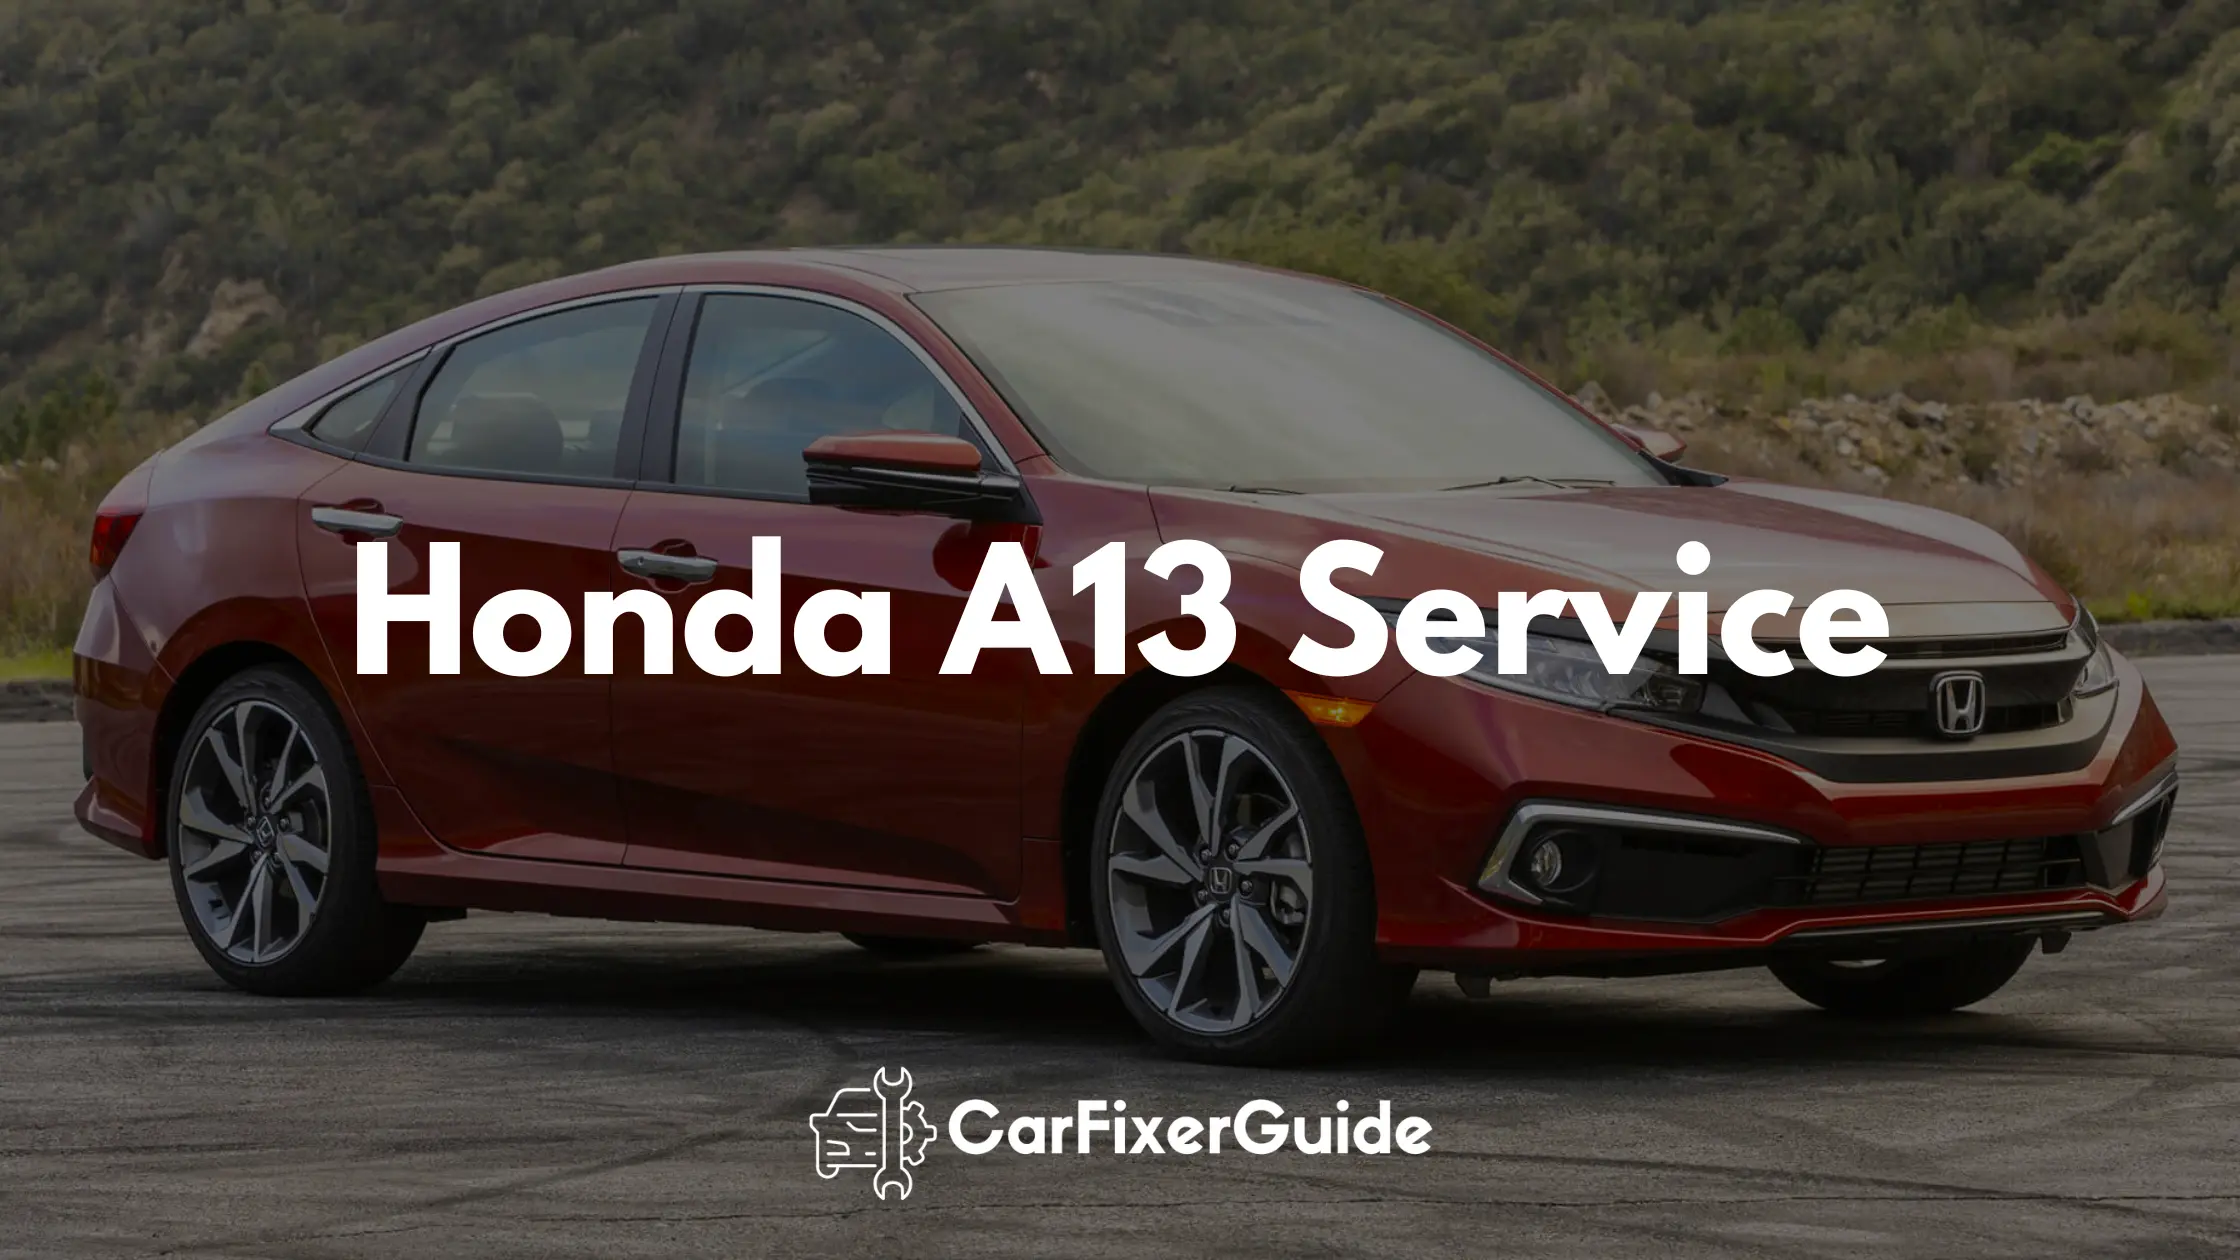 Honda A13 Service